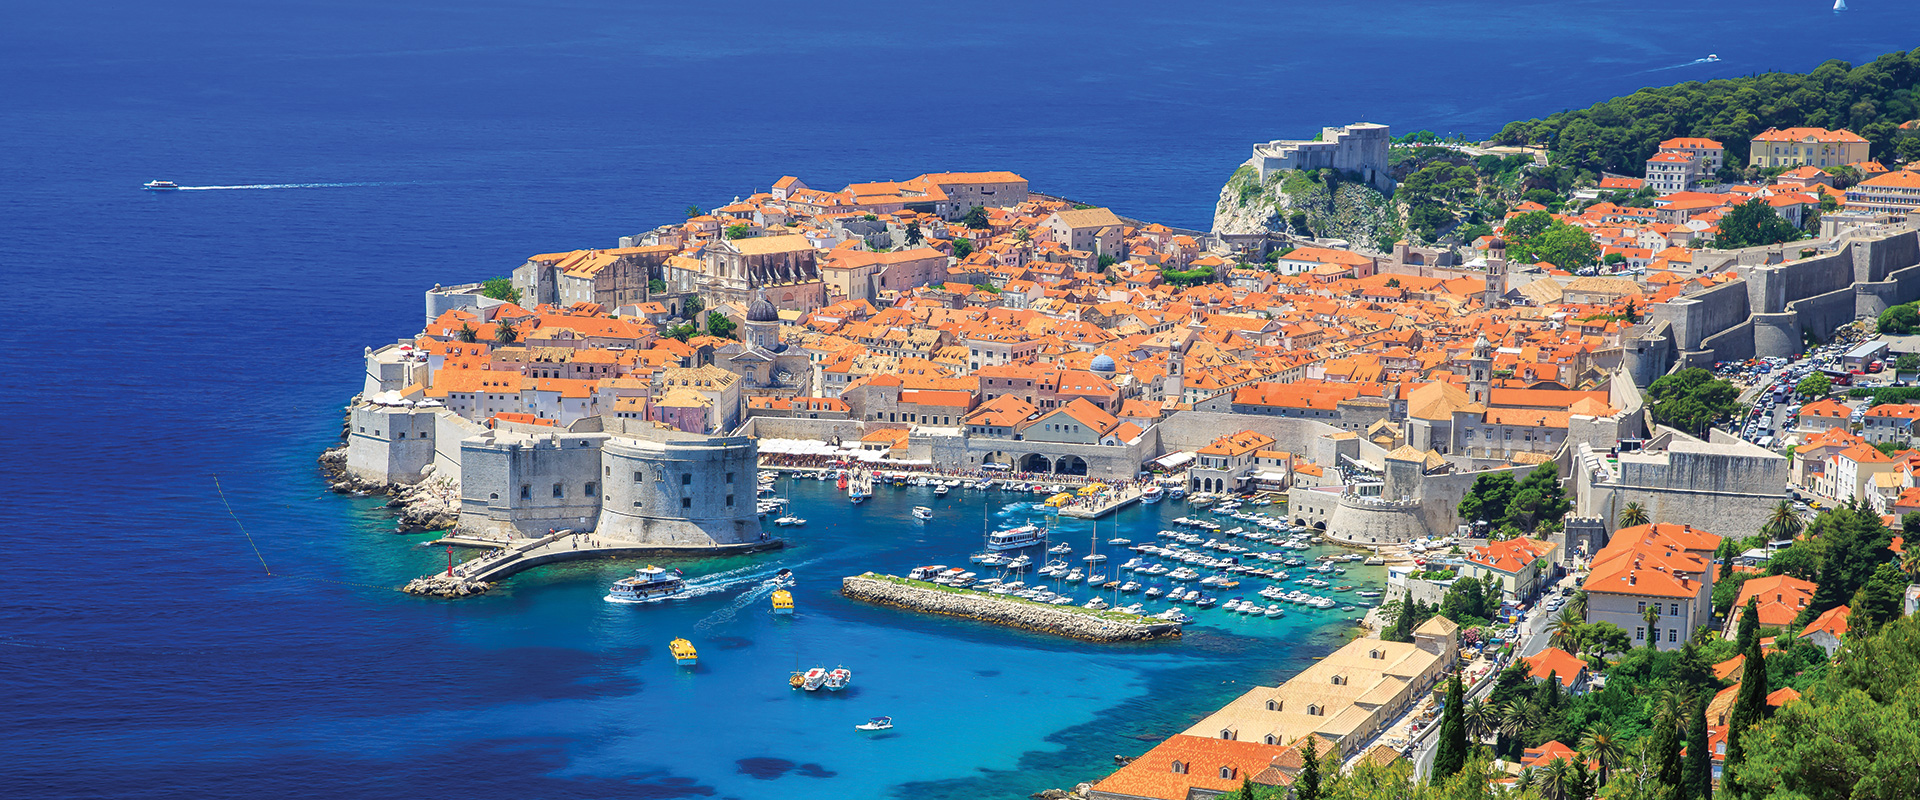 Admire the beautiful views of Croatia.